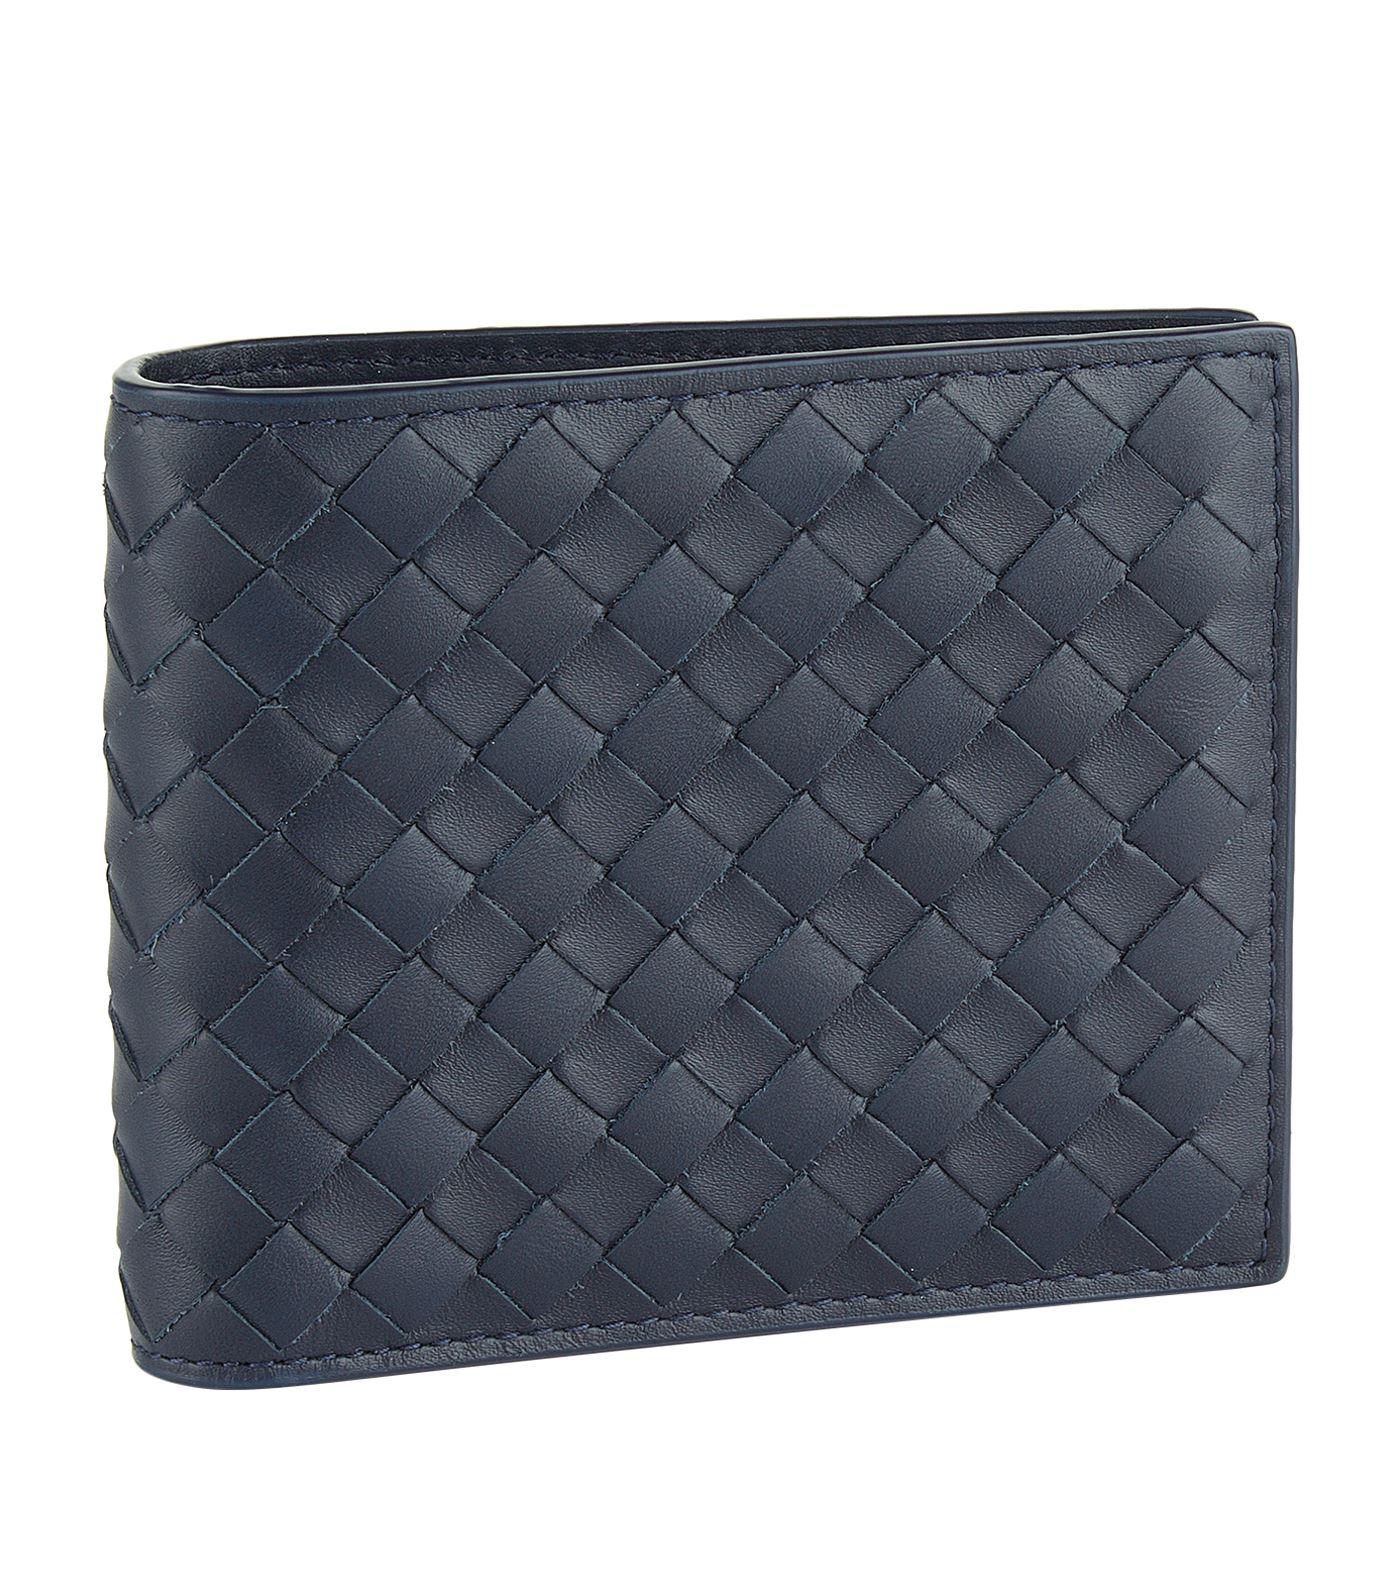 Bottega Veneta Intecciato Weave Leather Bifold Wallet in Blue for Men